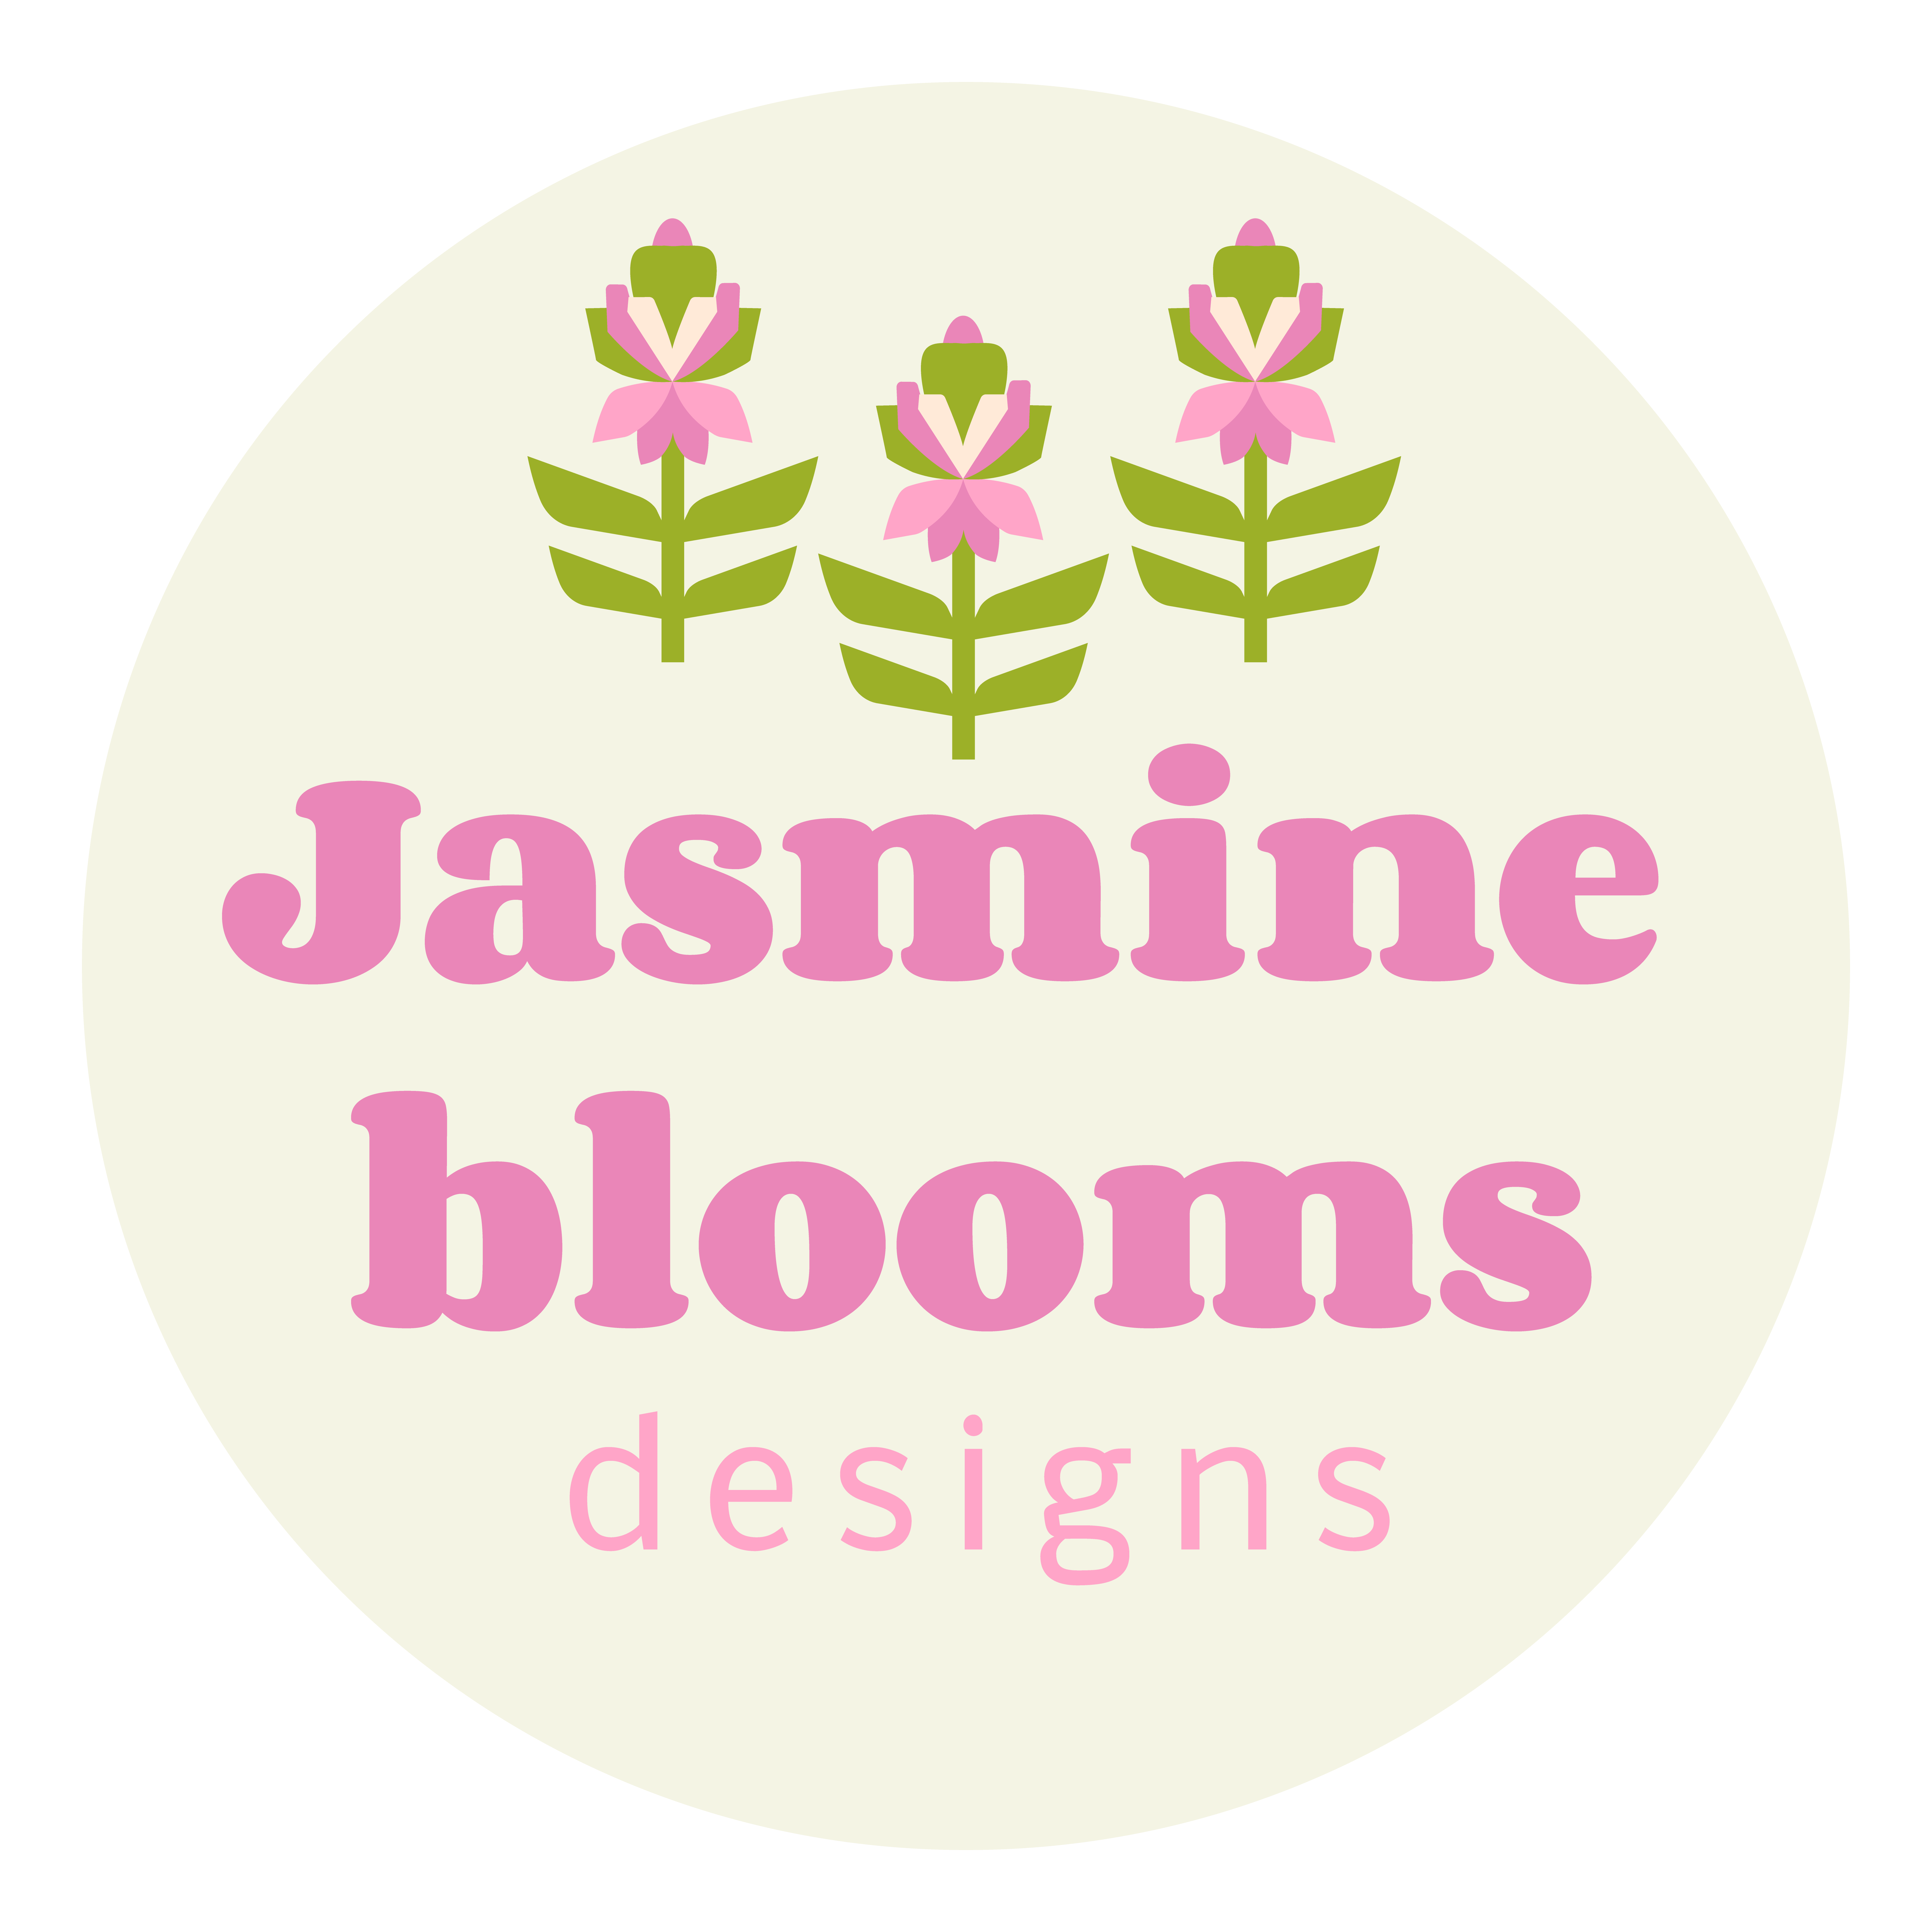 Jasmine blooms designs